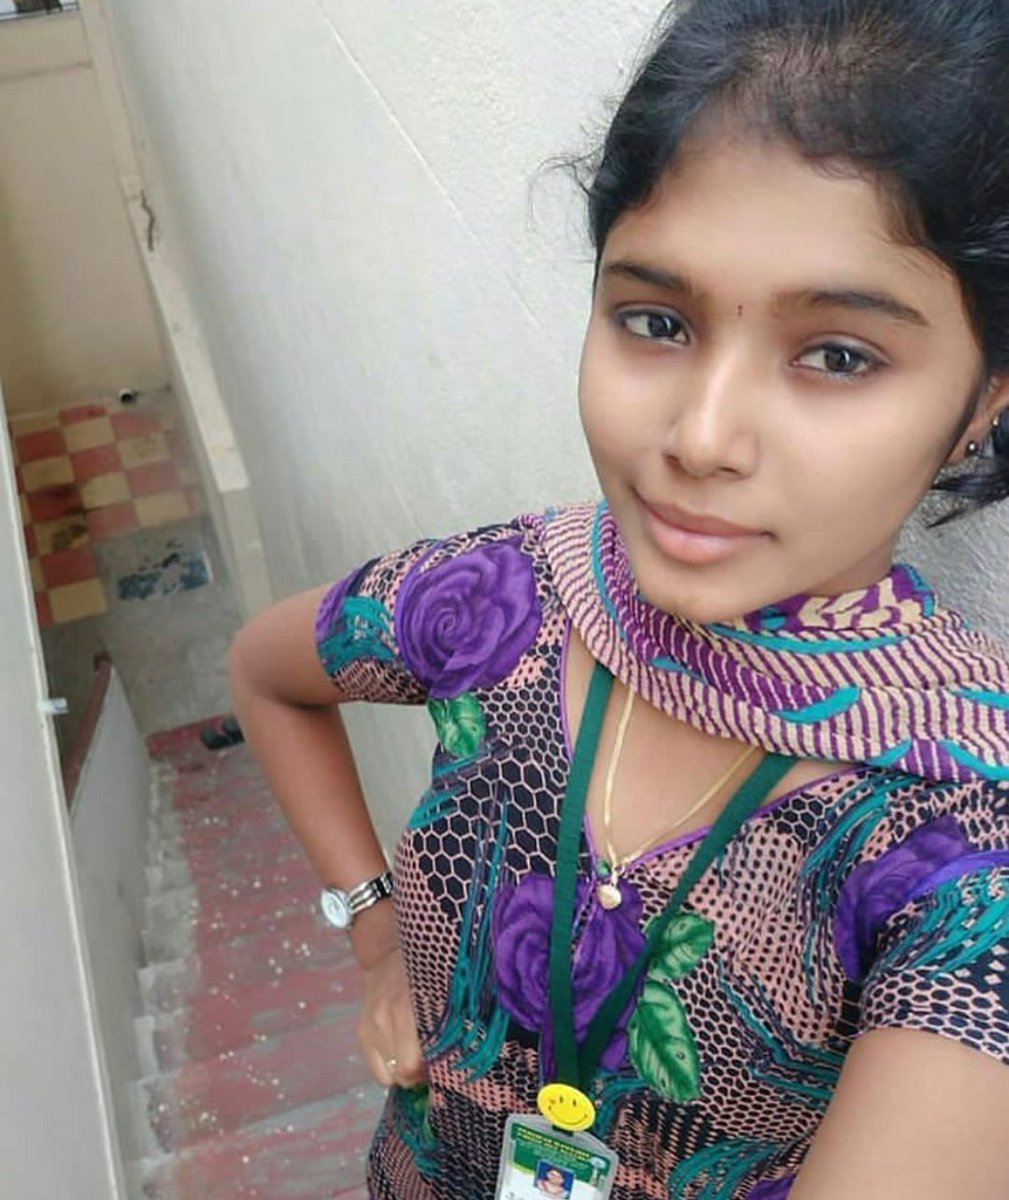 Vikram Asst Director On Twitter Tamilgirl Chennai Smallboobs 88tnt99 Who Want Fuck This Girl